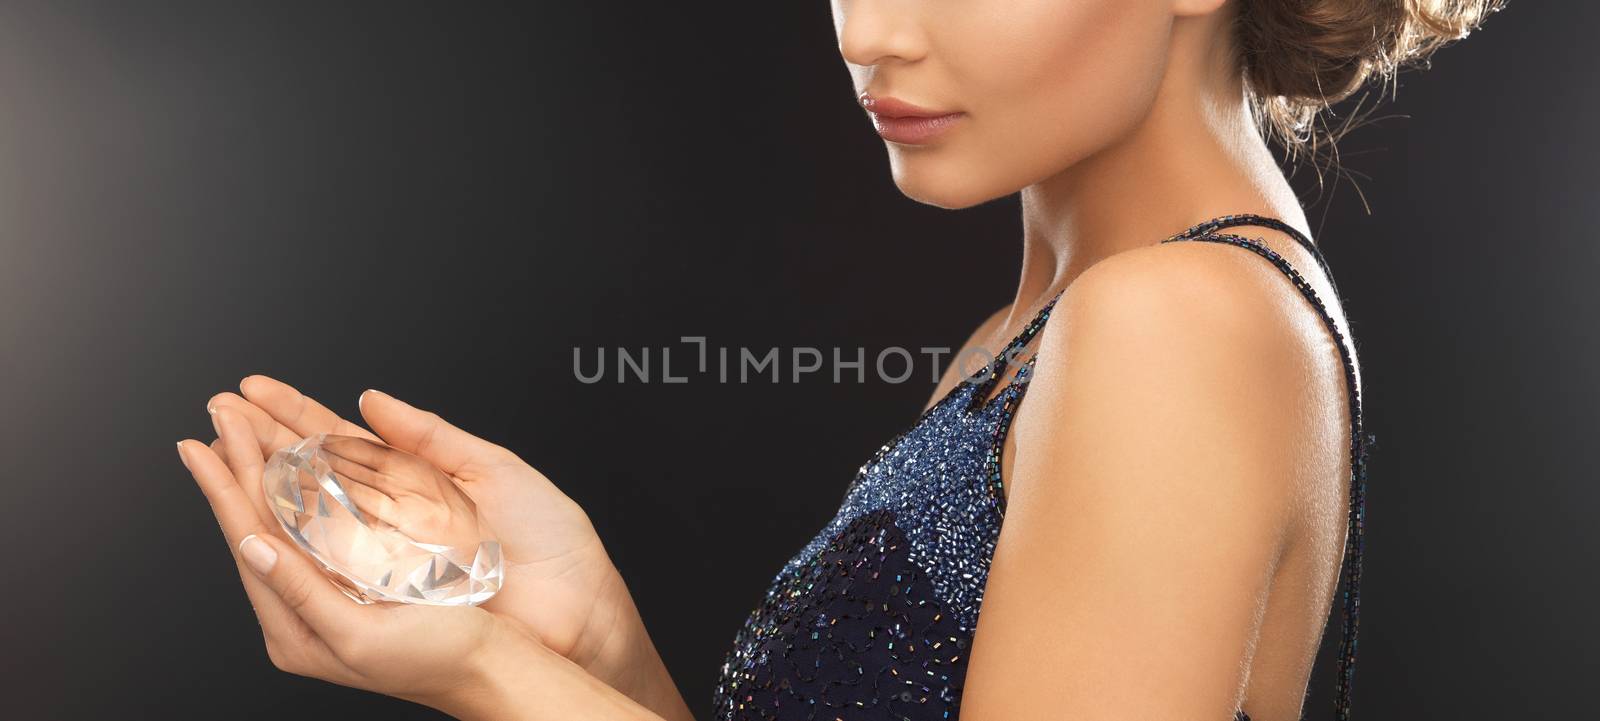 beautiful woman in evening dress with big diamond